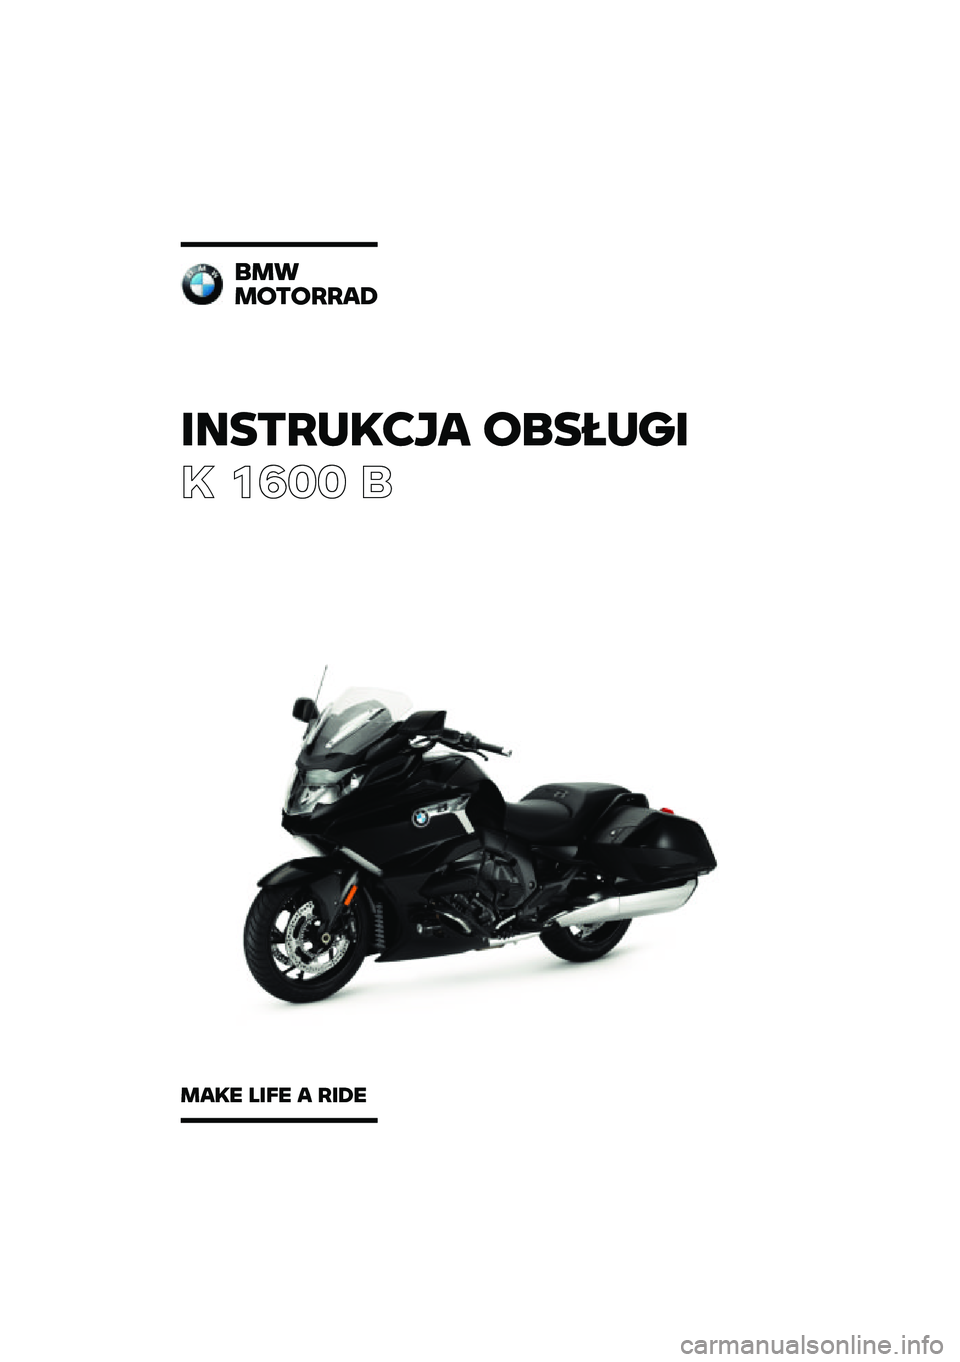 BMW MOTORRAD K 1600 B 2020  Instrukcja obsługi (in Polish) �������\b�	�
� �\f�
�����
� ���� �	
�
��
��\f��\f����
���\b� ���� � ���� 